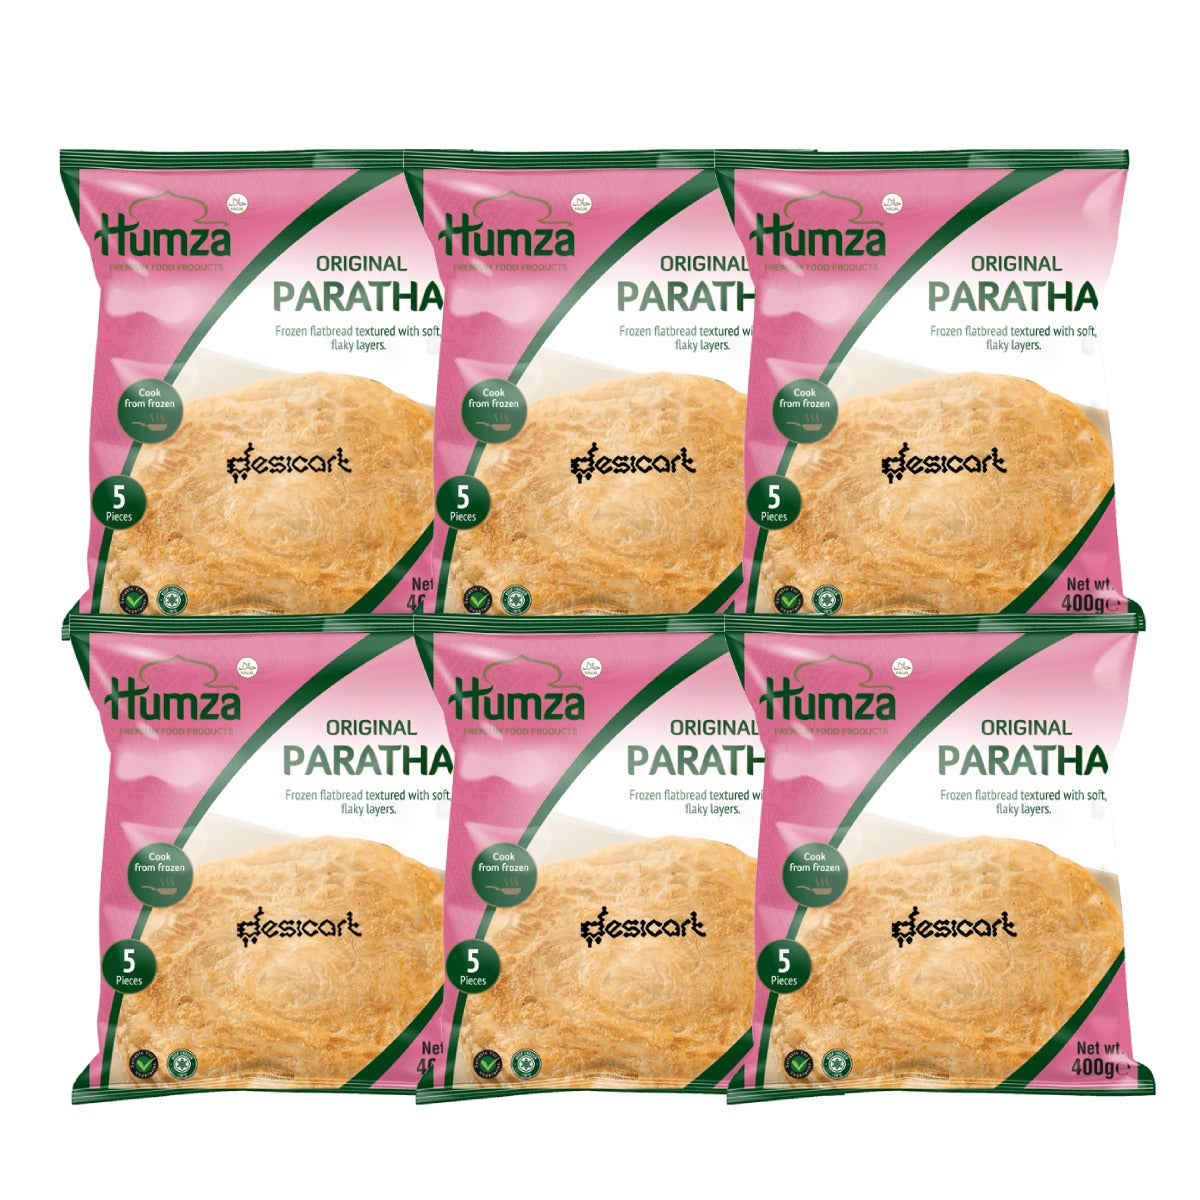 Humza Original Paratha Pack of 6 400g